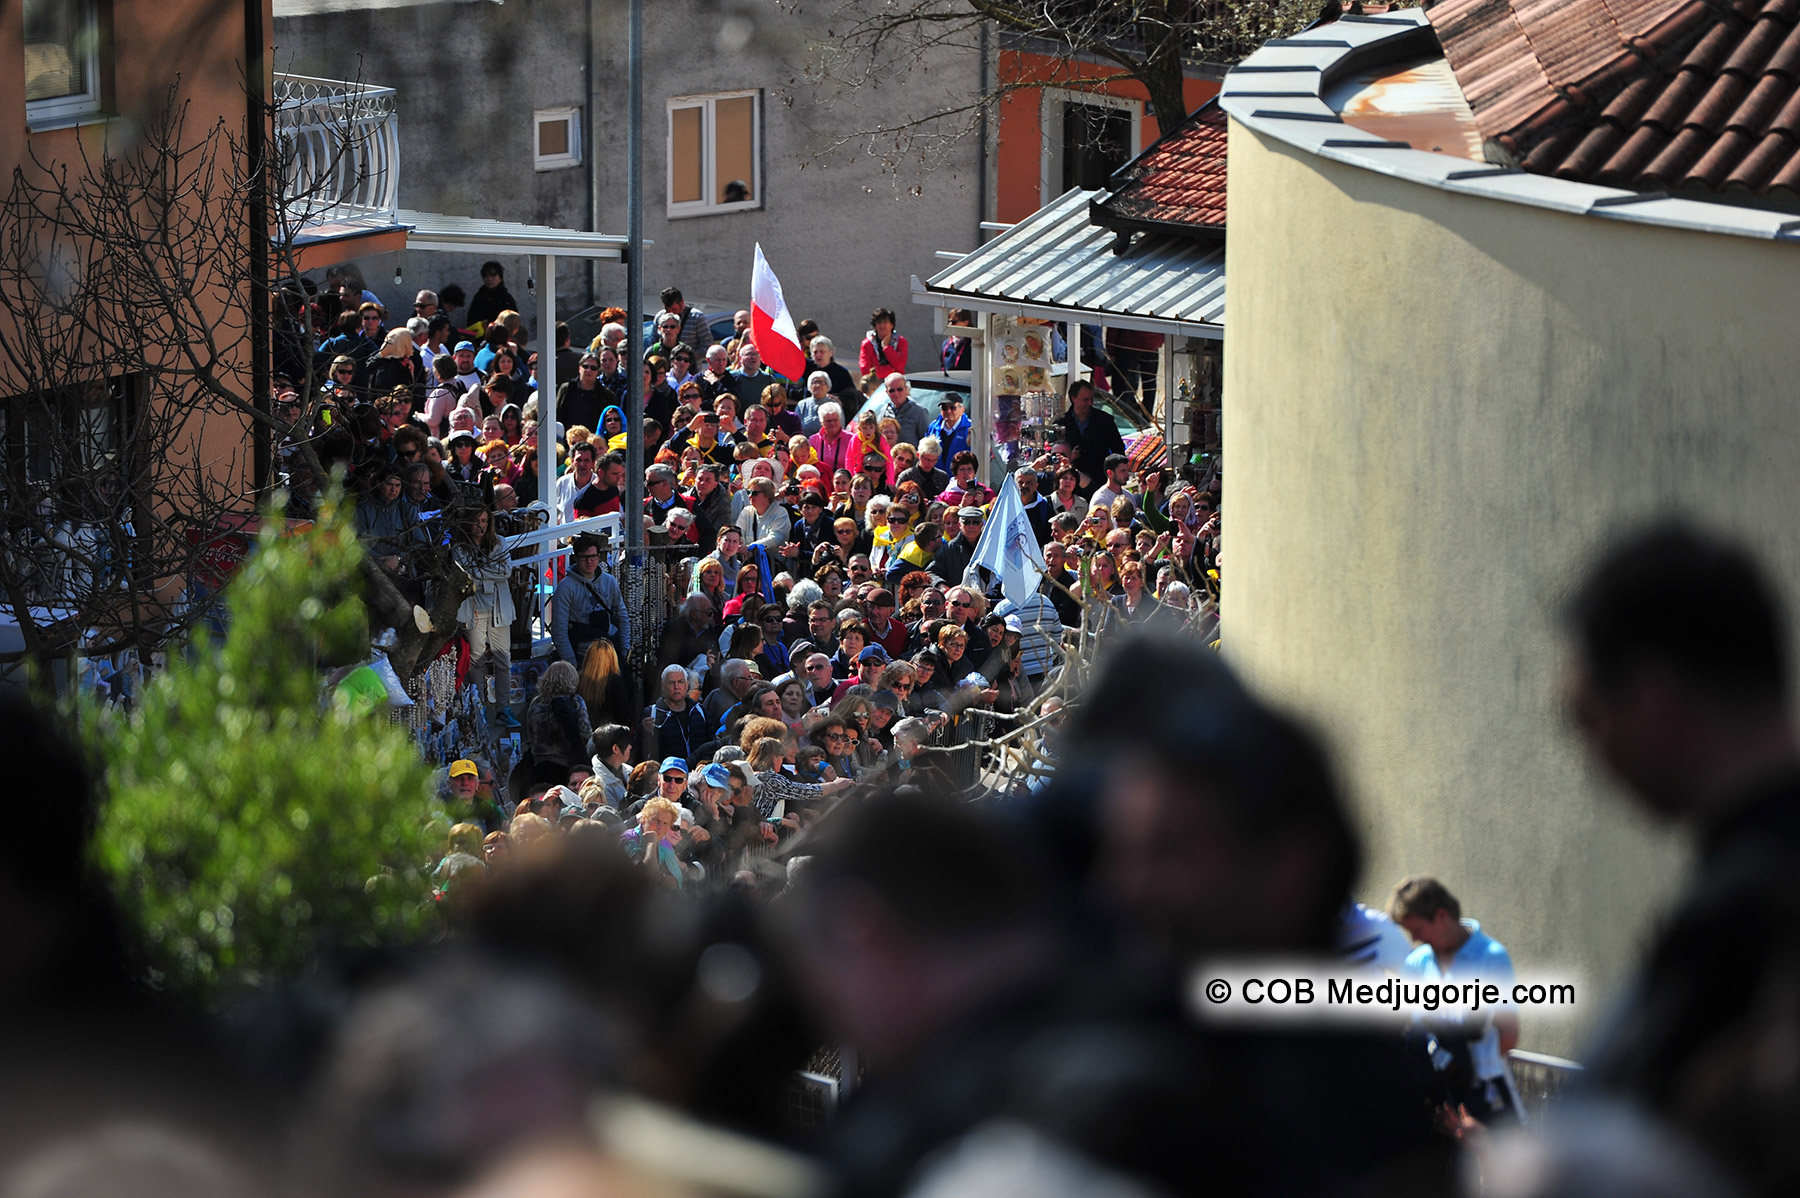 Crowds in Medjugorje March 18, 2015